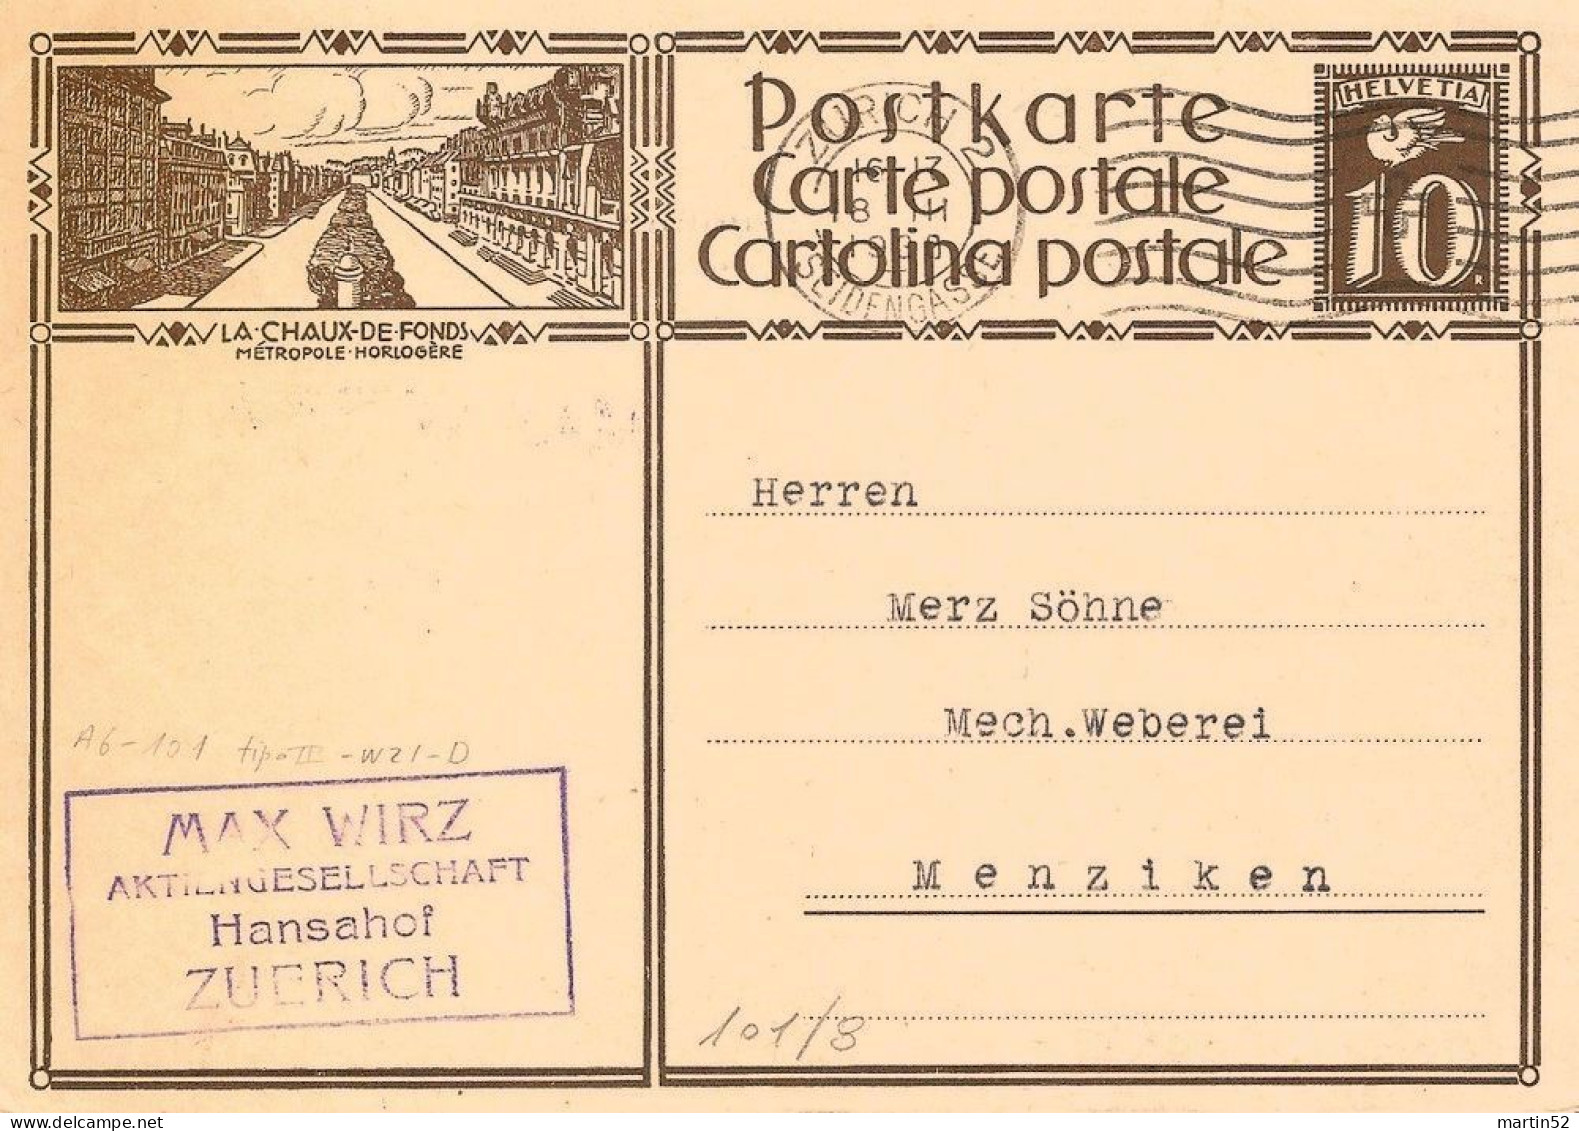 Schweiz Suisse 1930: Bild-PK CPI  LA CHAUX-DE-FONDS MÉTROPOLE HORLOGÈRE Mit Stempel ZÜRICH 18.III.1930 - Clocks